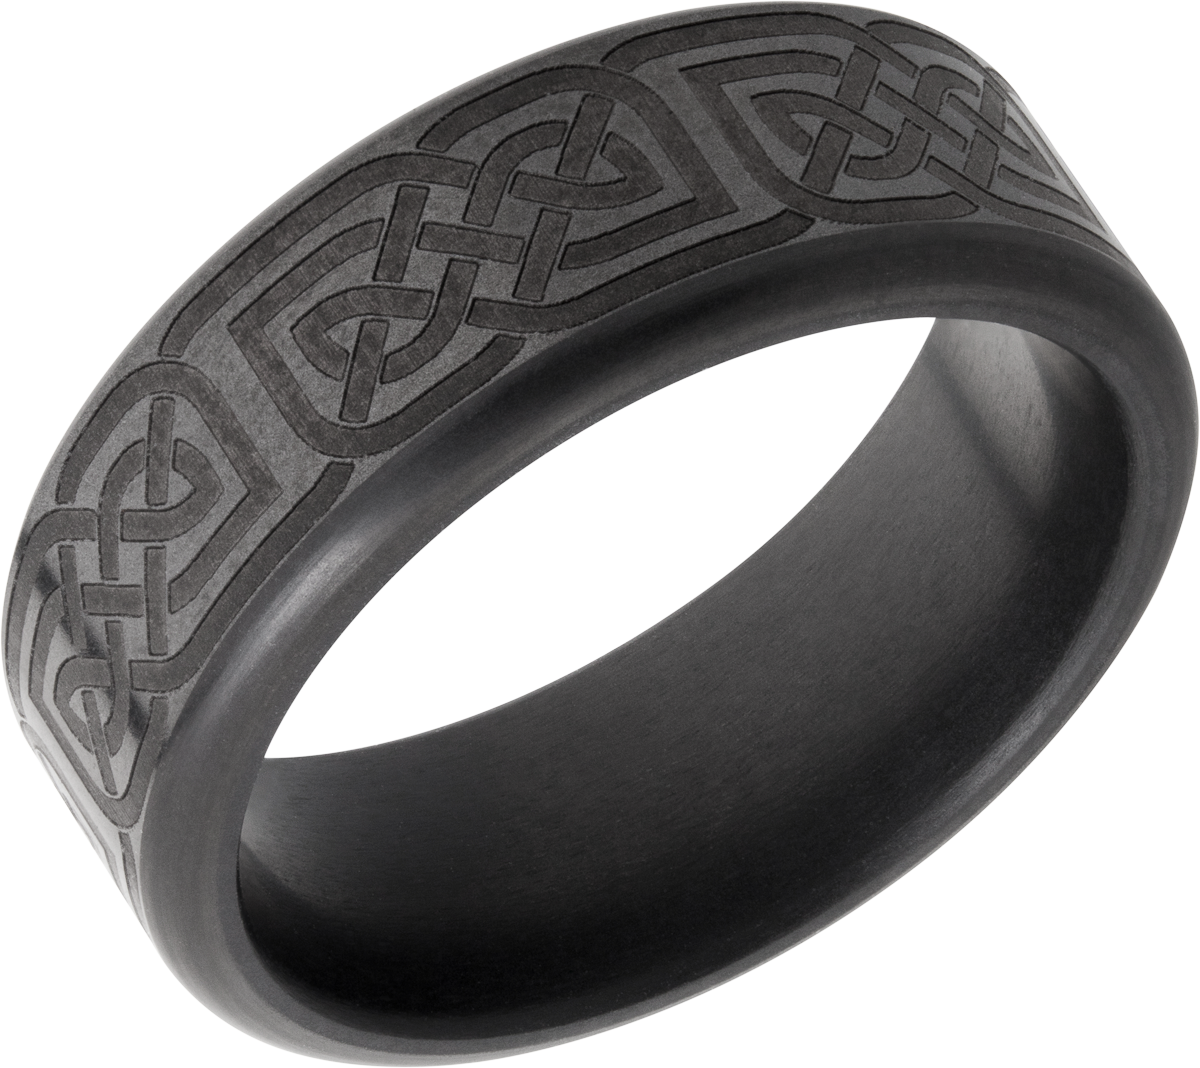 Elysium Kratos Celtic Pattern Black Diamond Wedding Ring